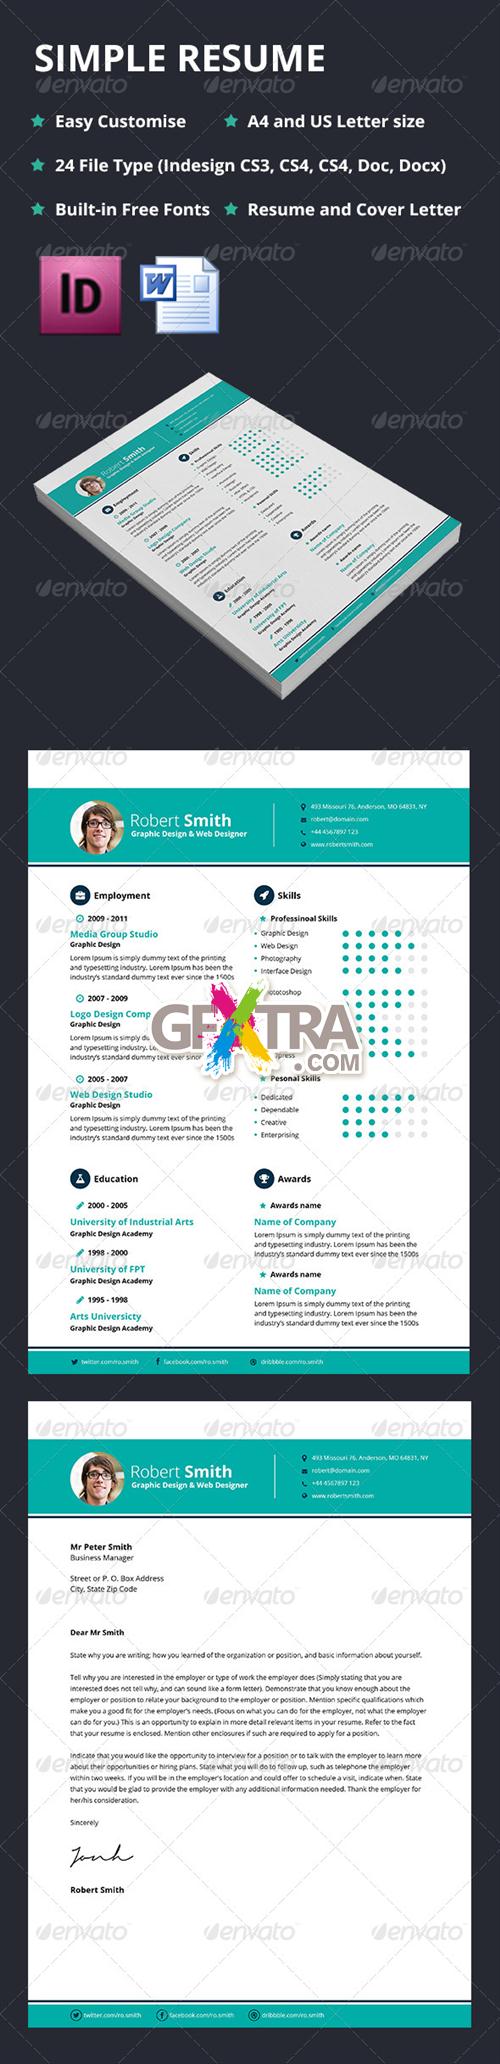 GraphicRiver - Simple Resume